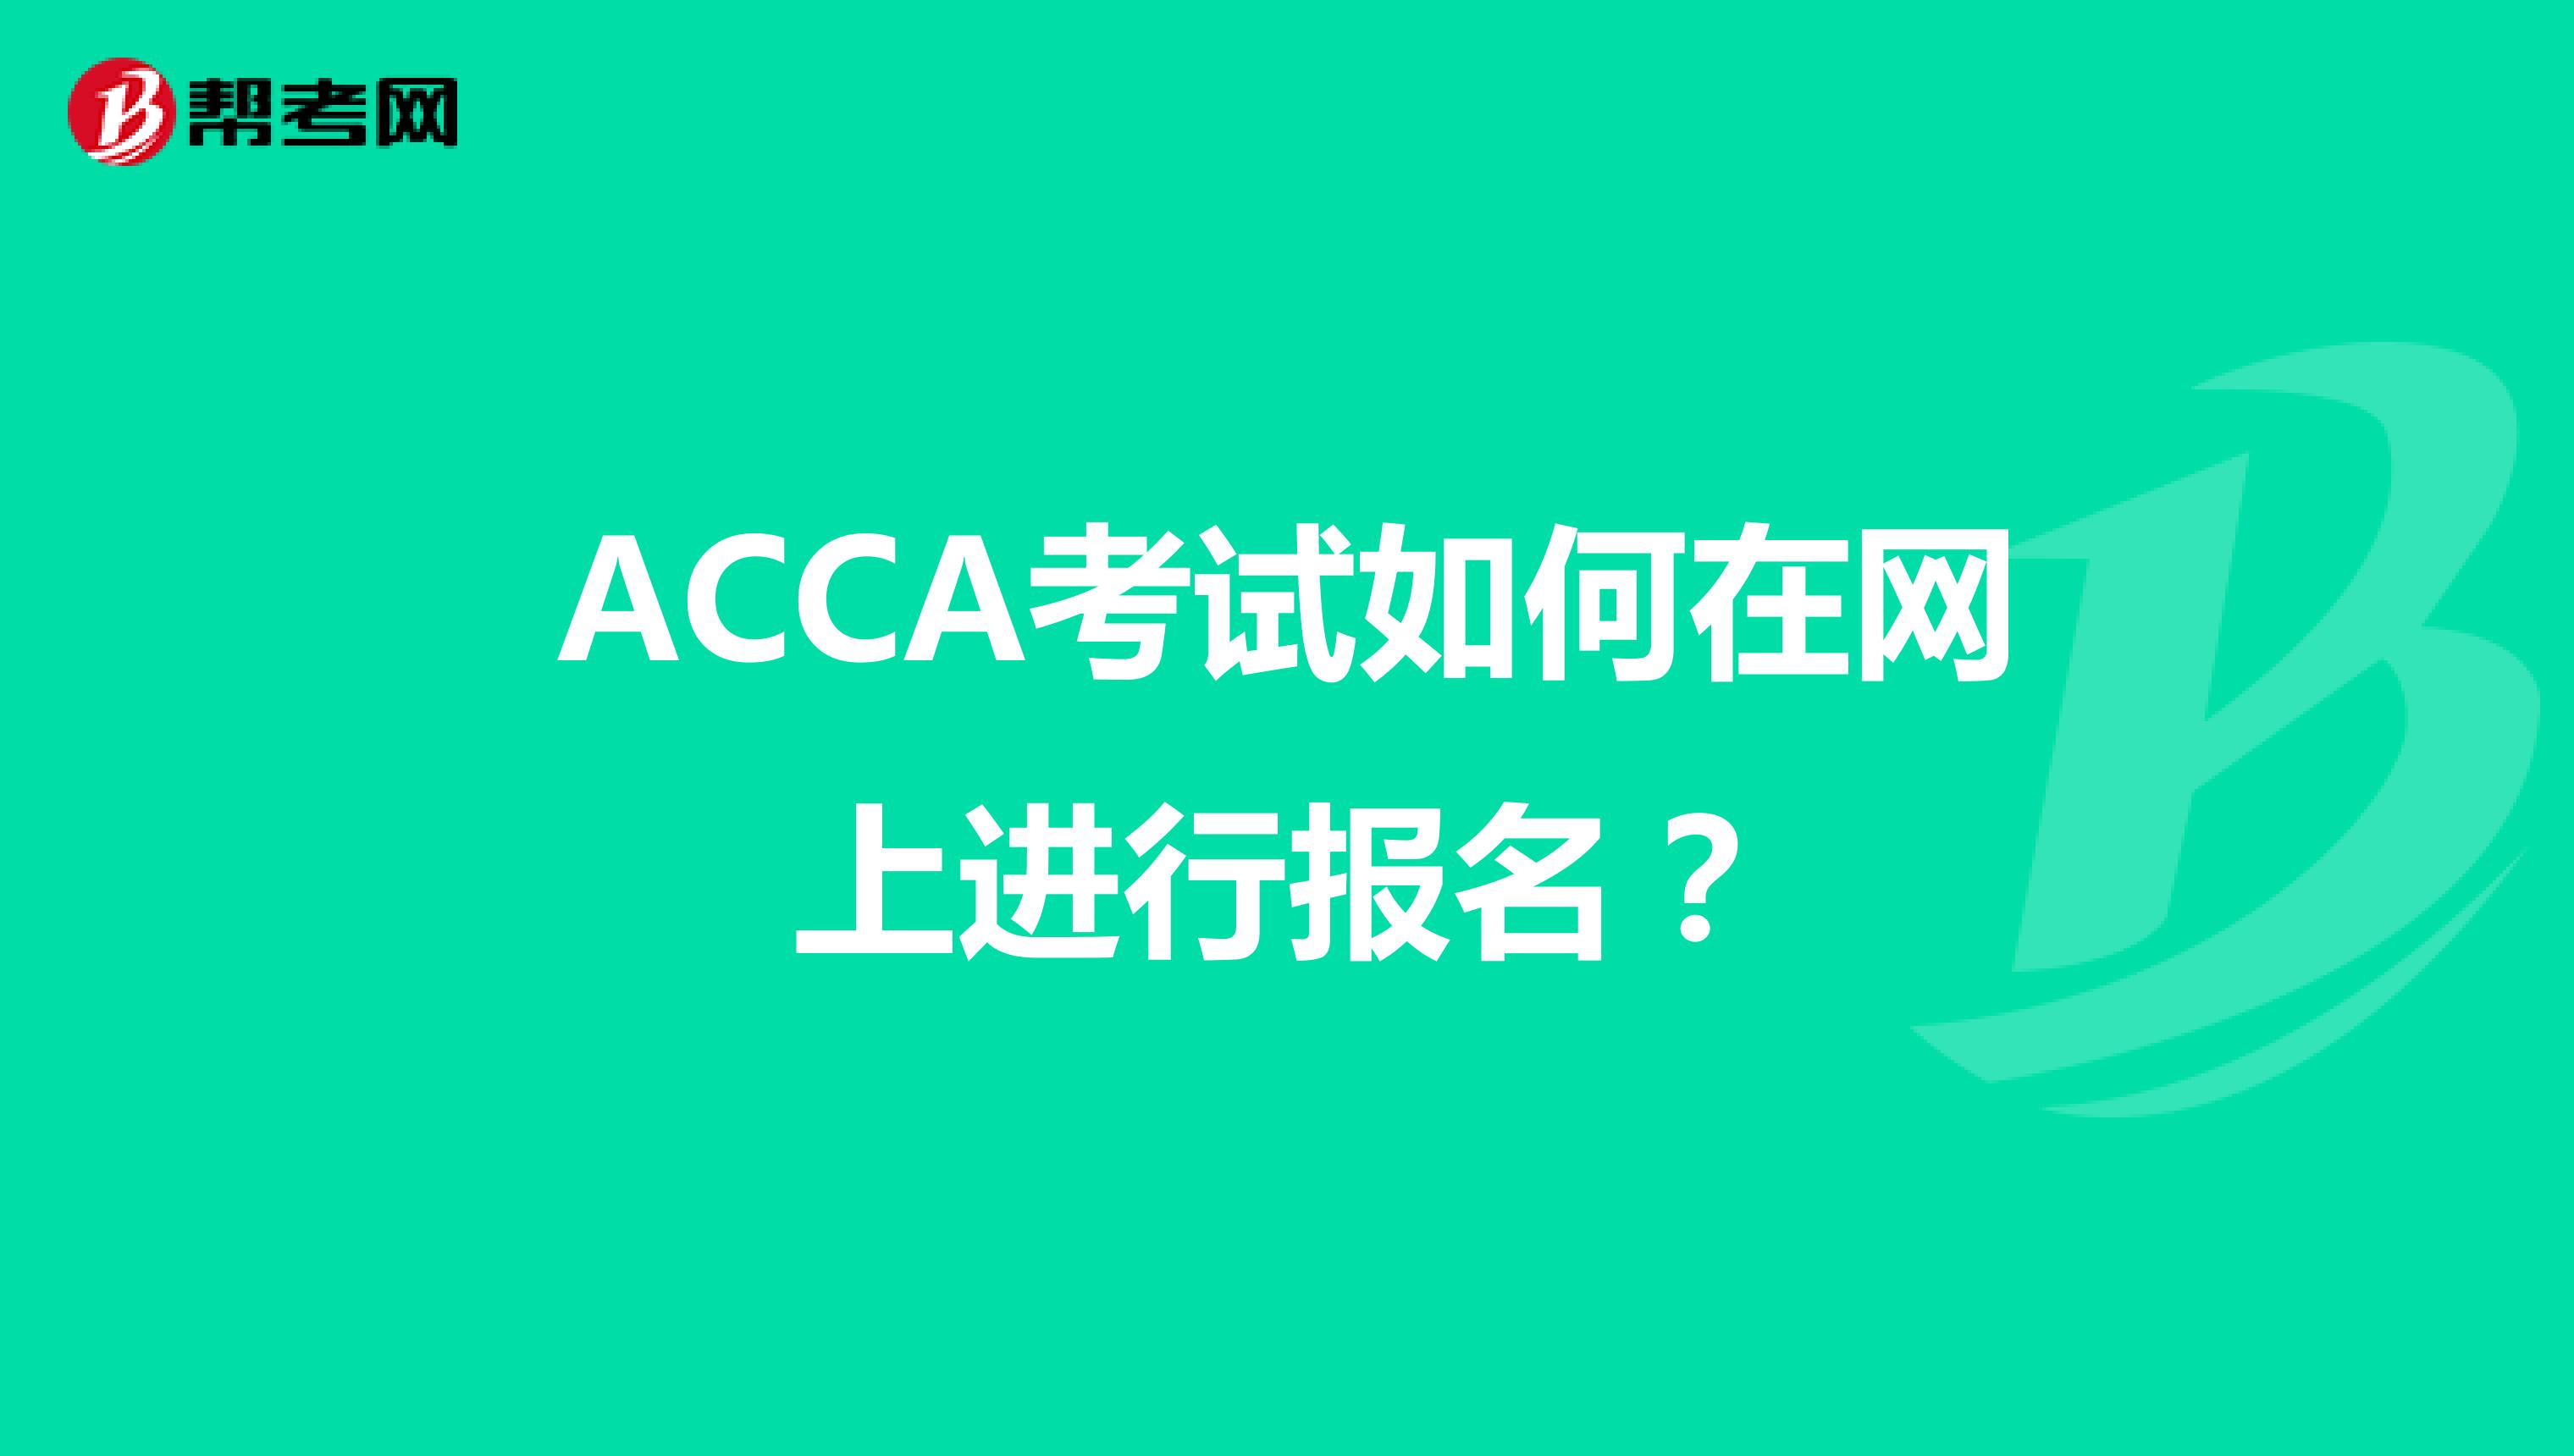 ACCA考试如何在网上进行报名？